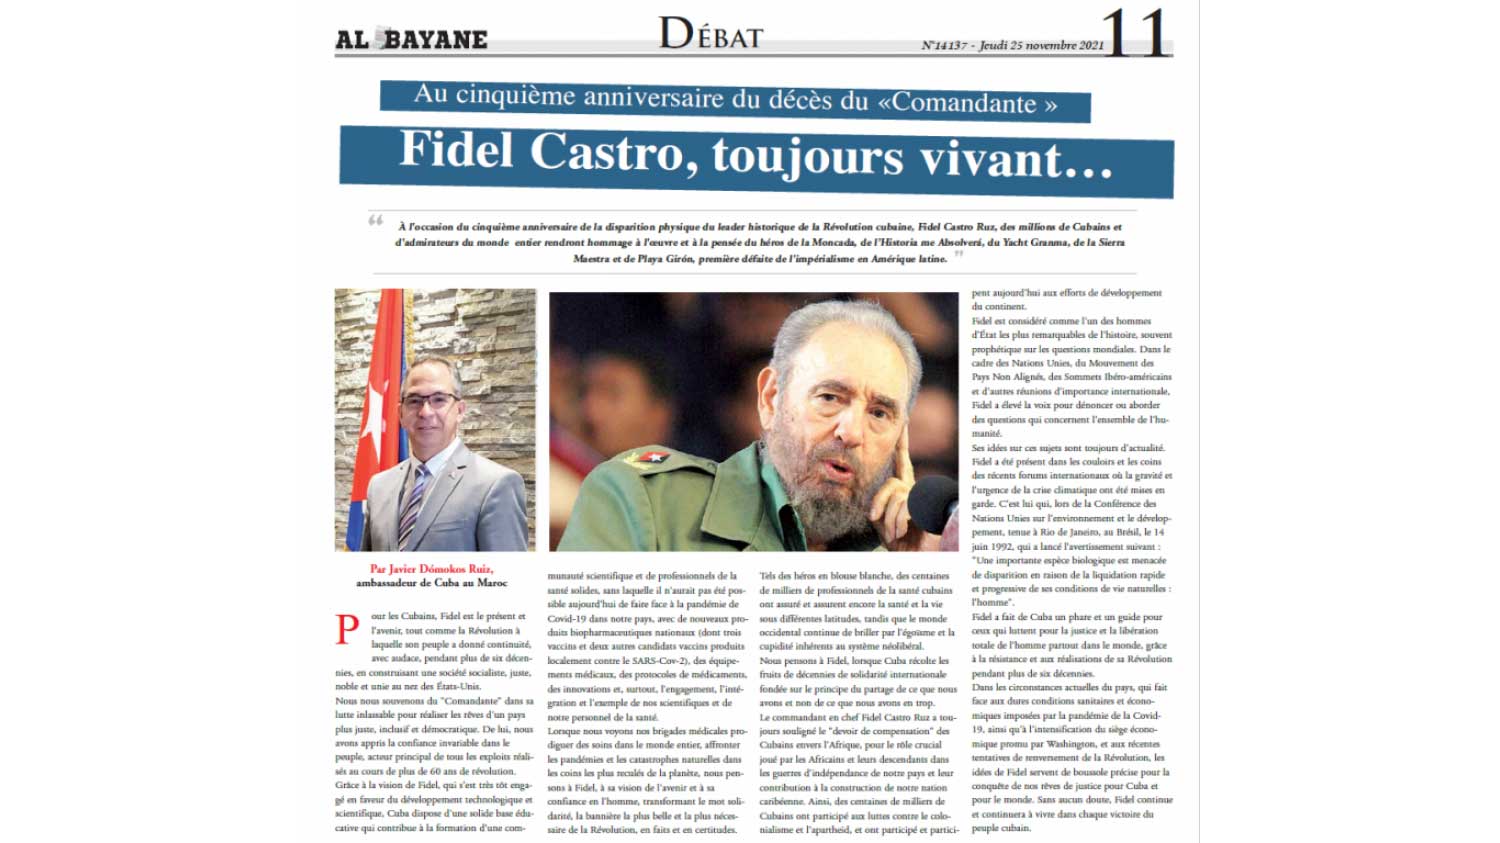 Moroccan newspaper publishes article on Fidel Castro